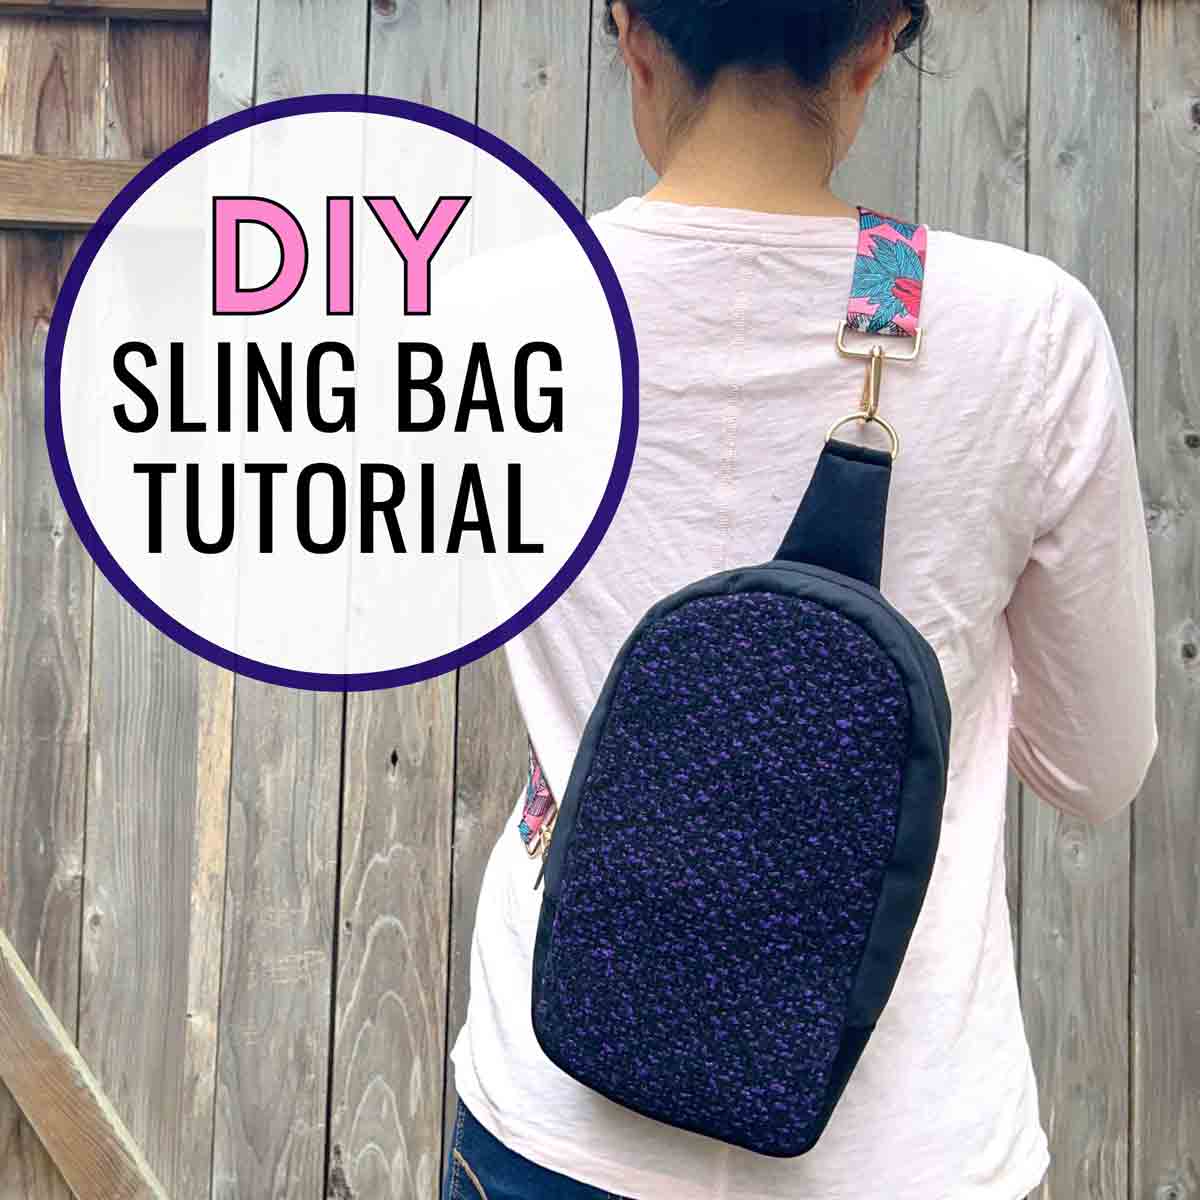 finished sling bag on model with text overlay "DIY Sling Bag Tutorial"